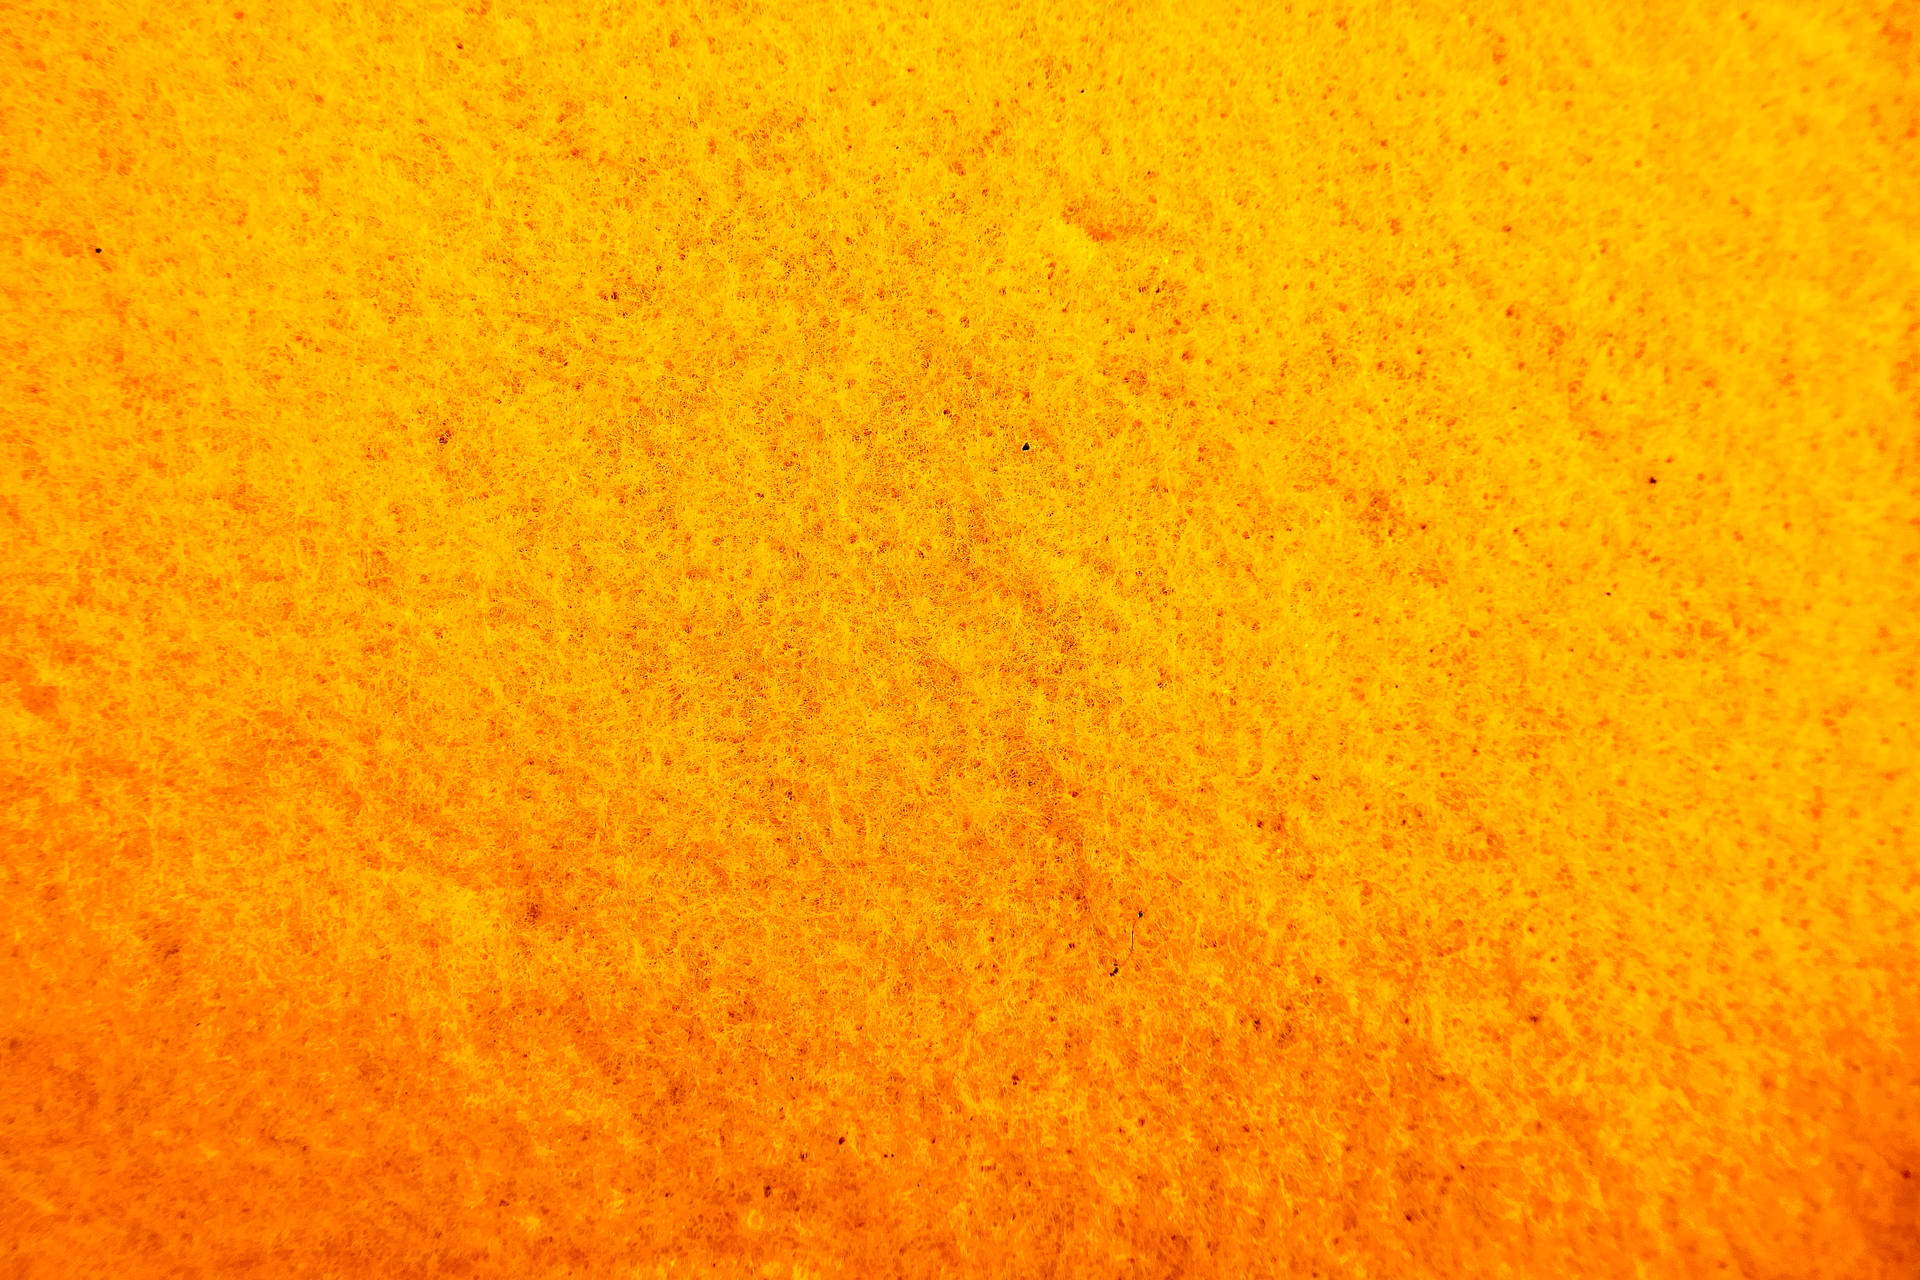 4522X3015 Orange Wallpaper and Background